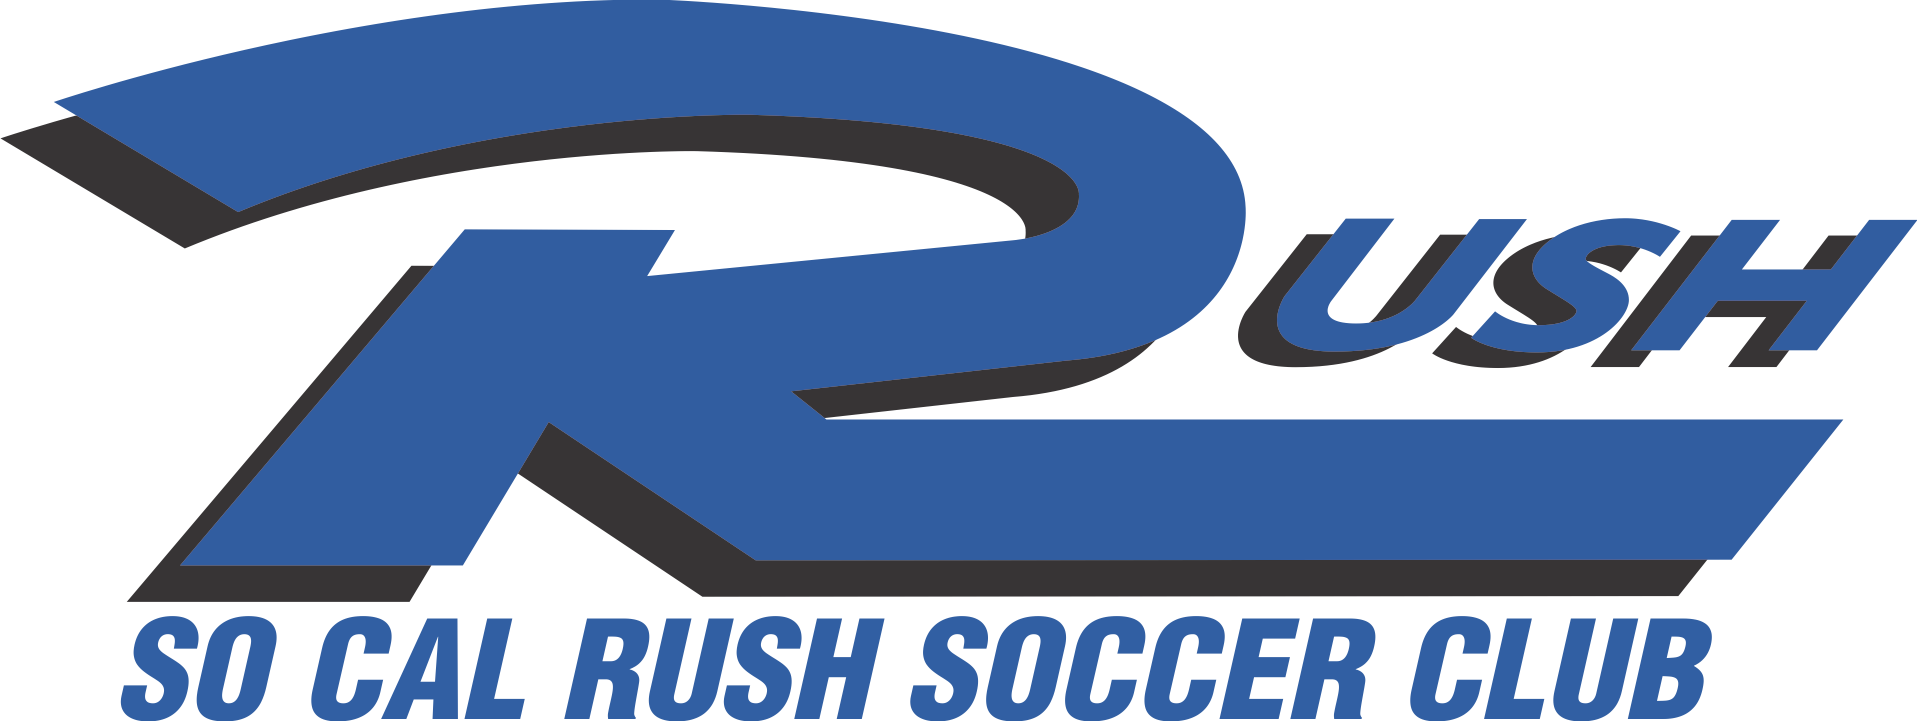 So Cal Rush Soccer Club team badge